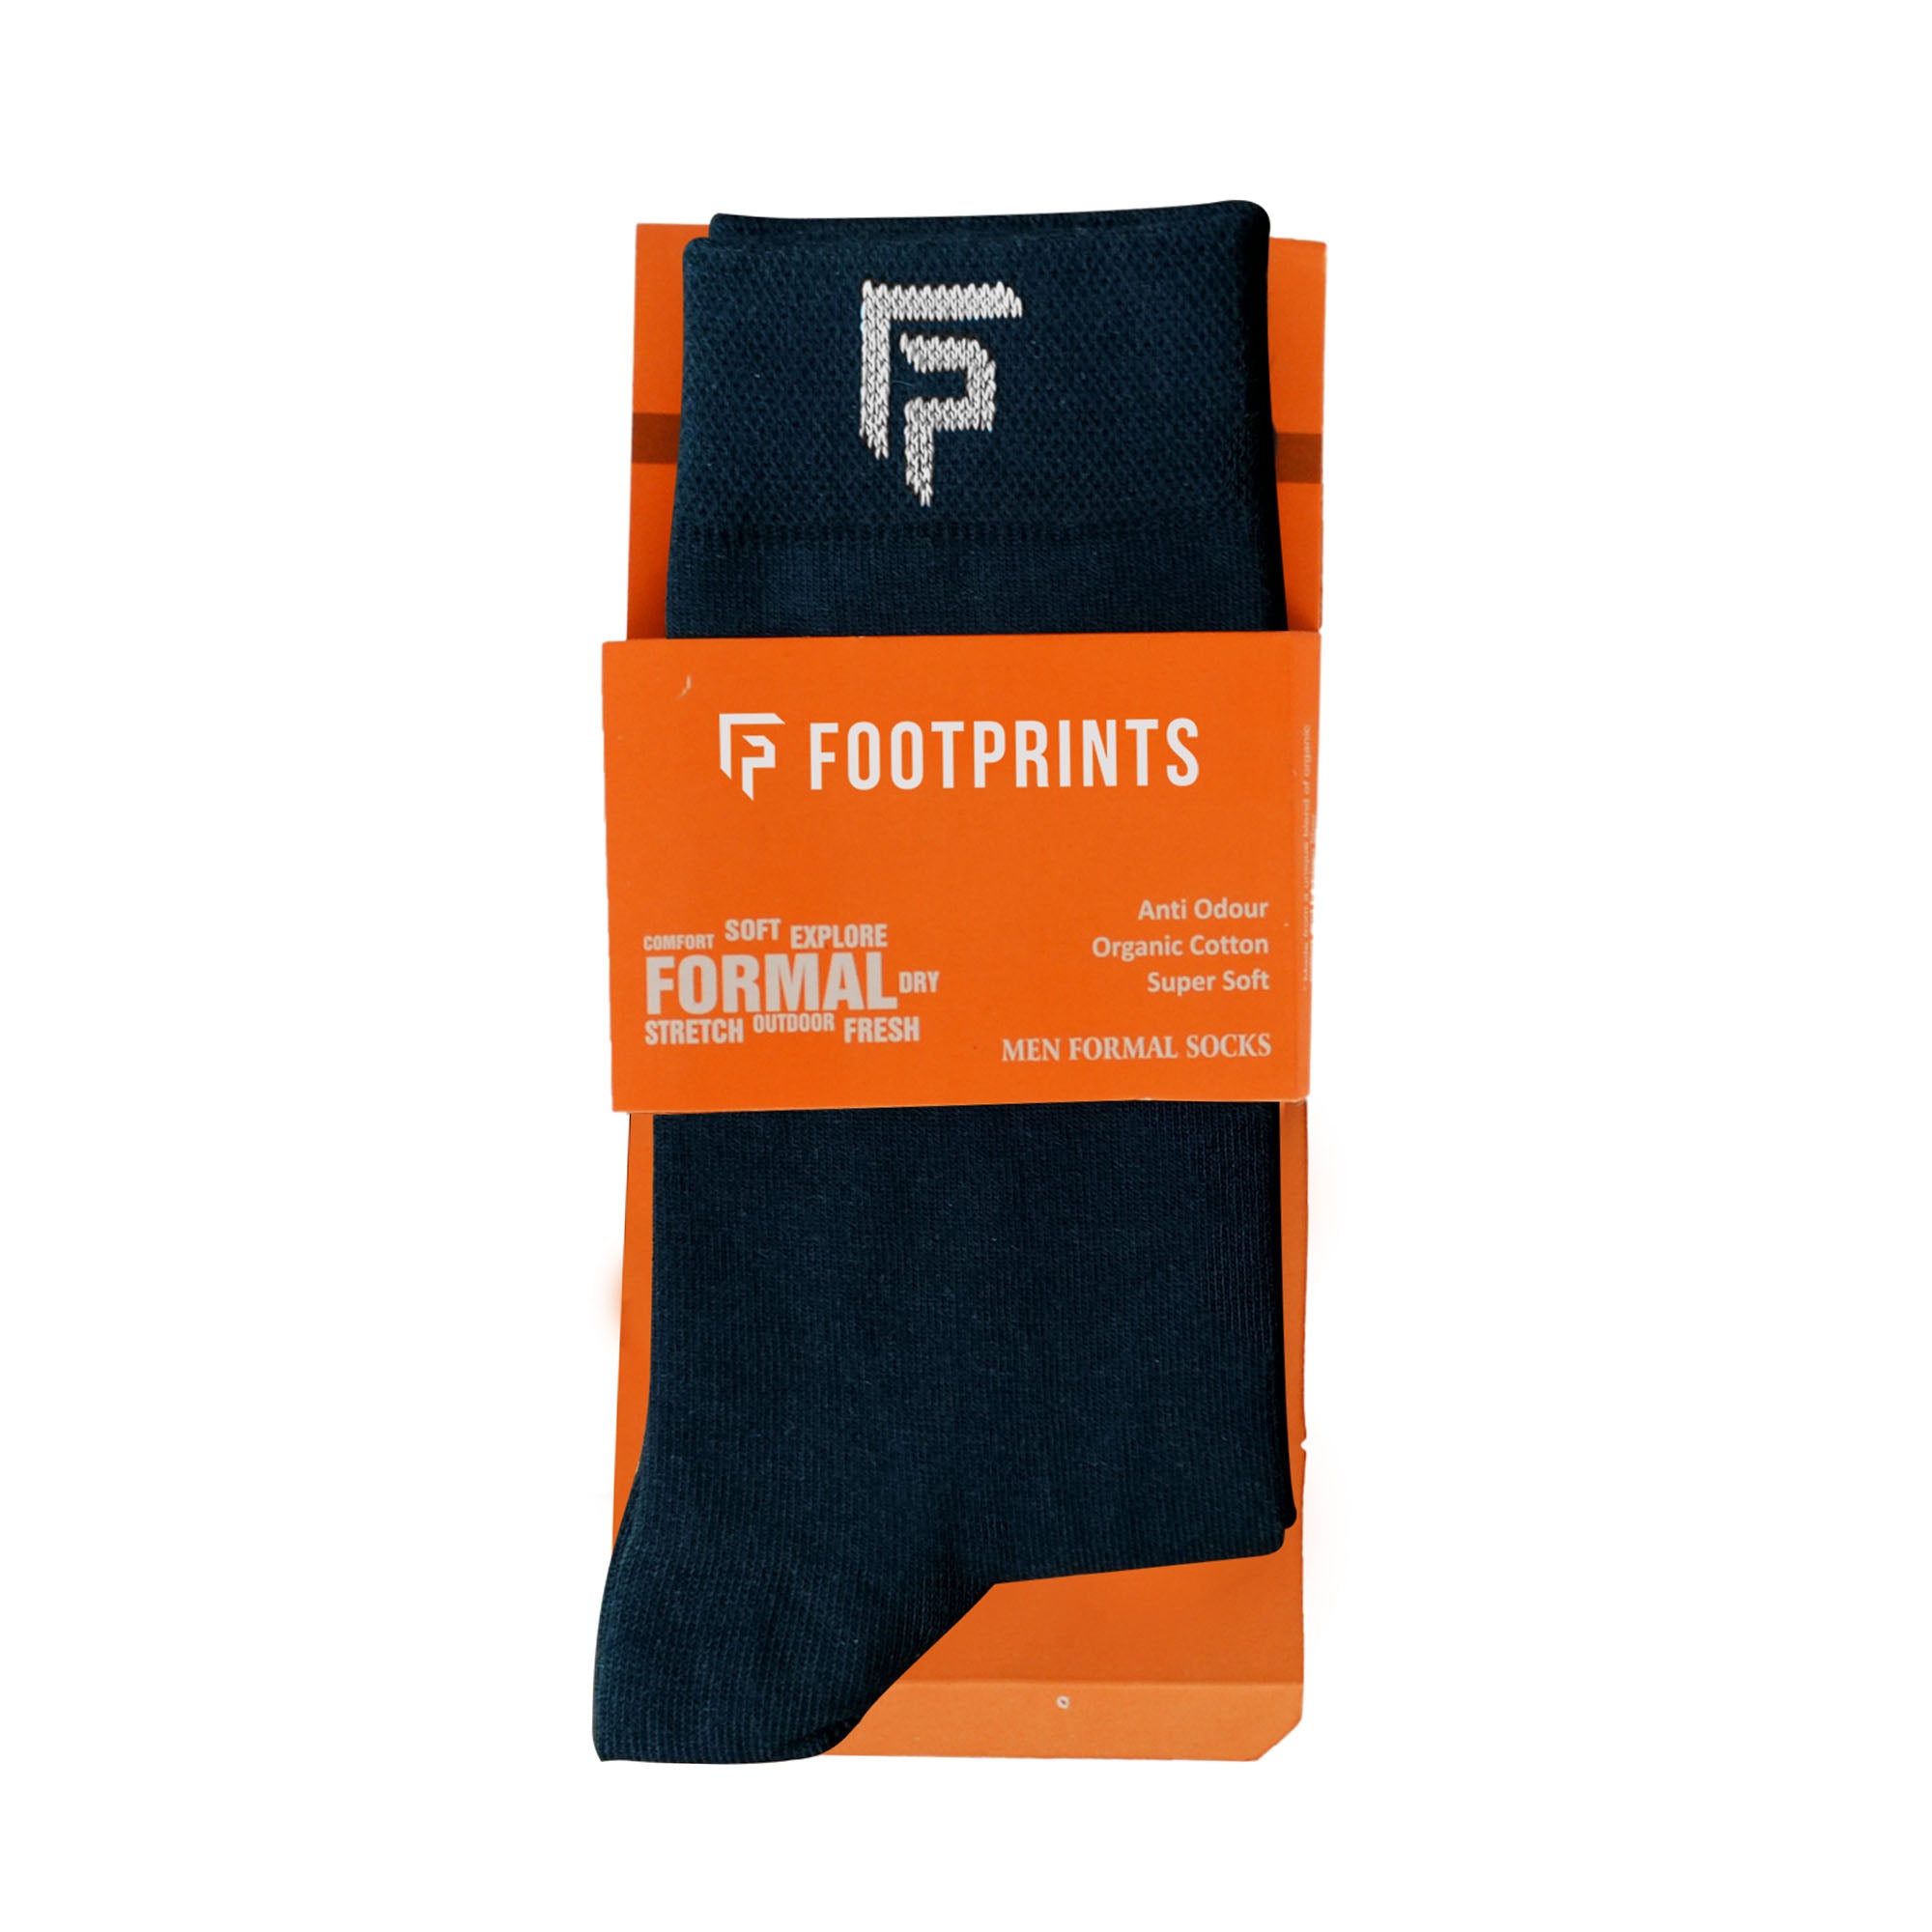 Footprints Men's Formal Organic Cotton & Bamboo Odour free Socks